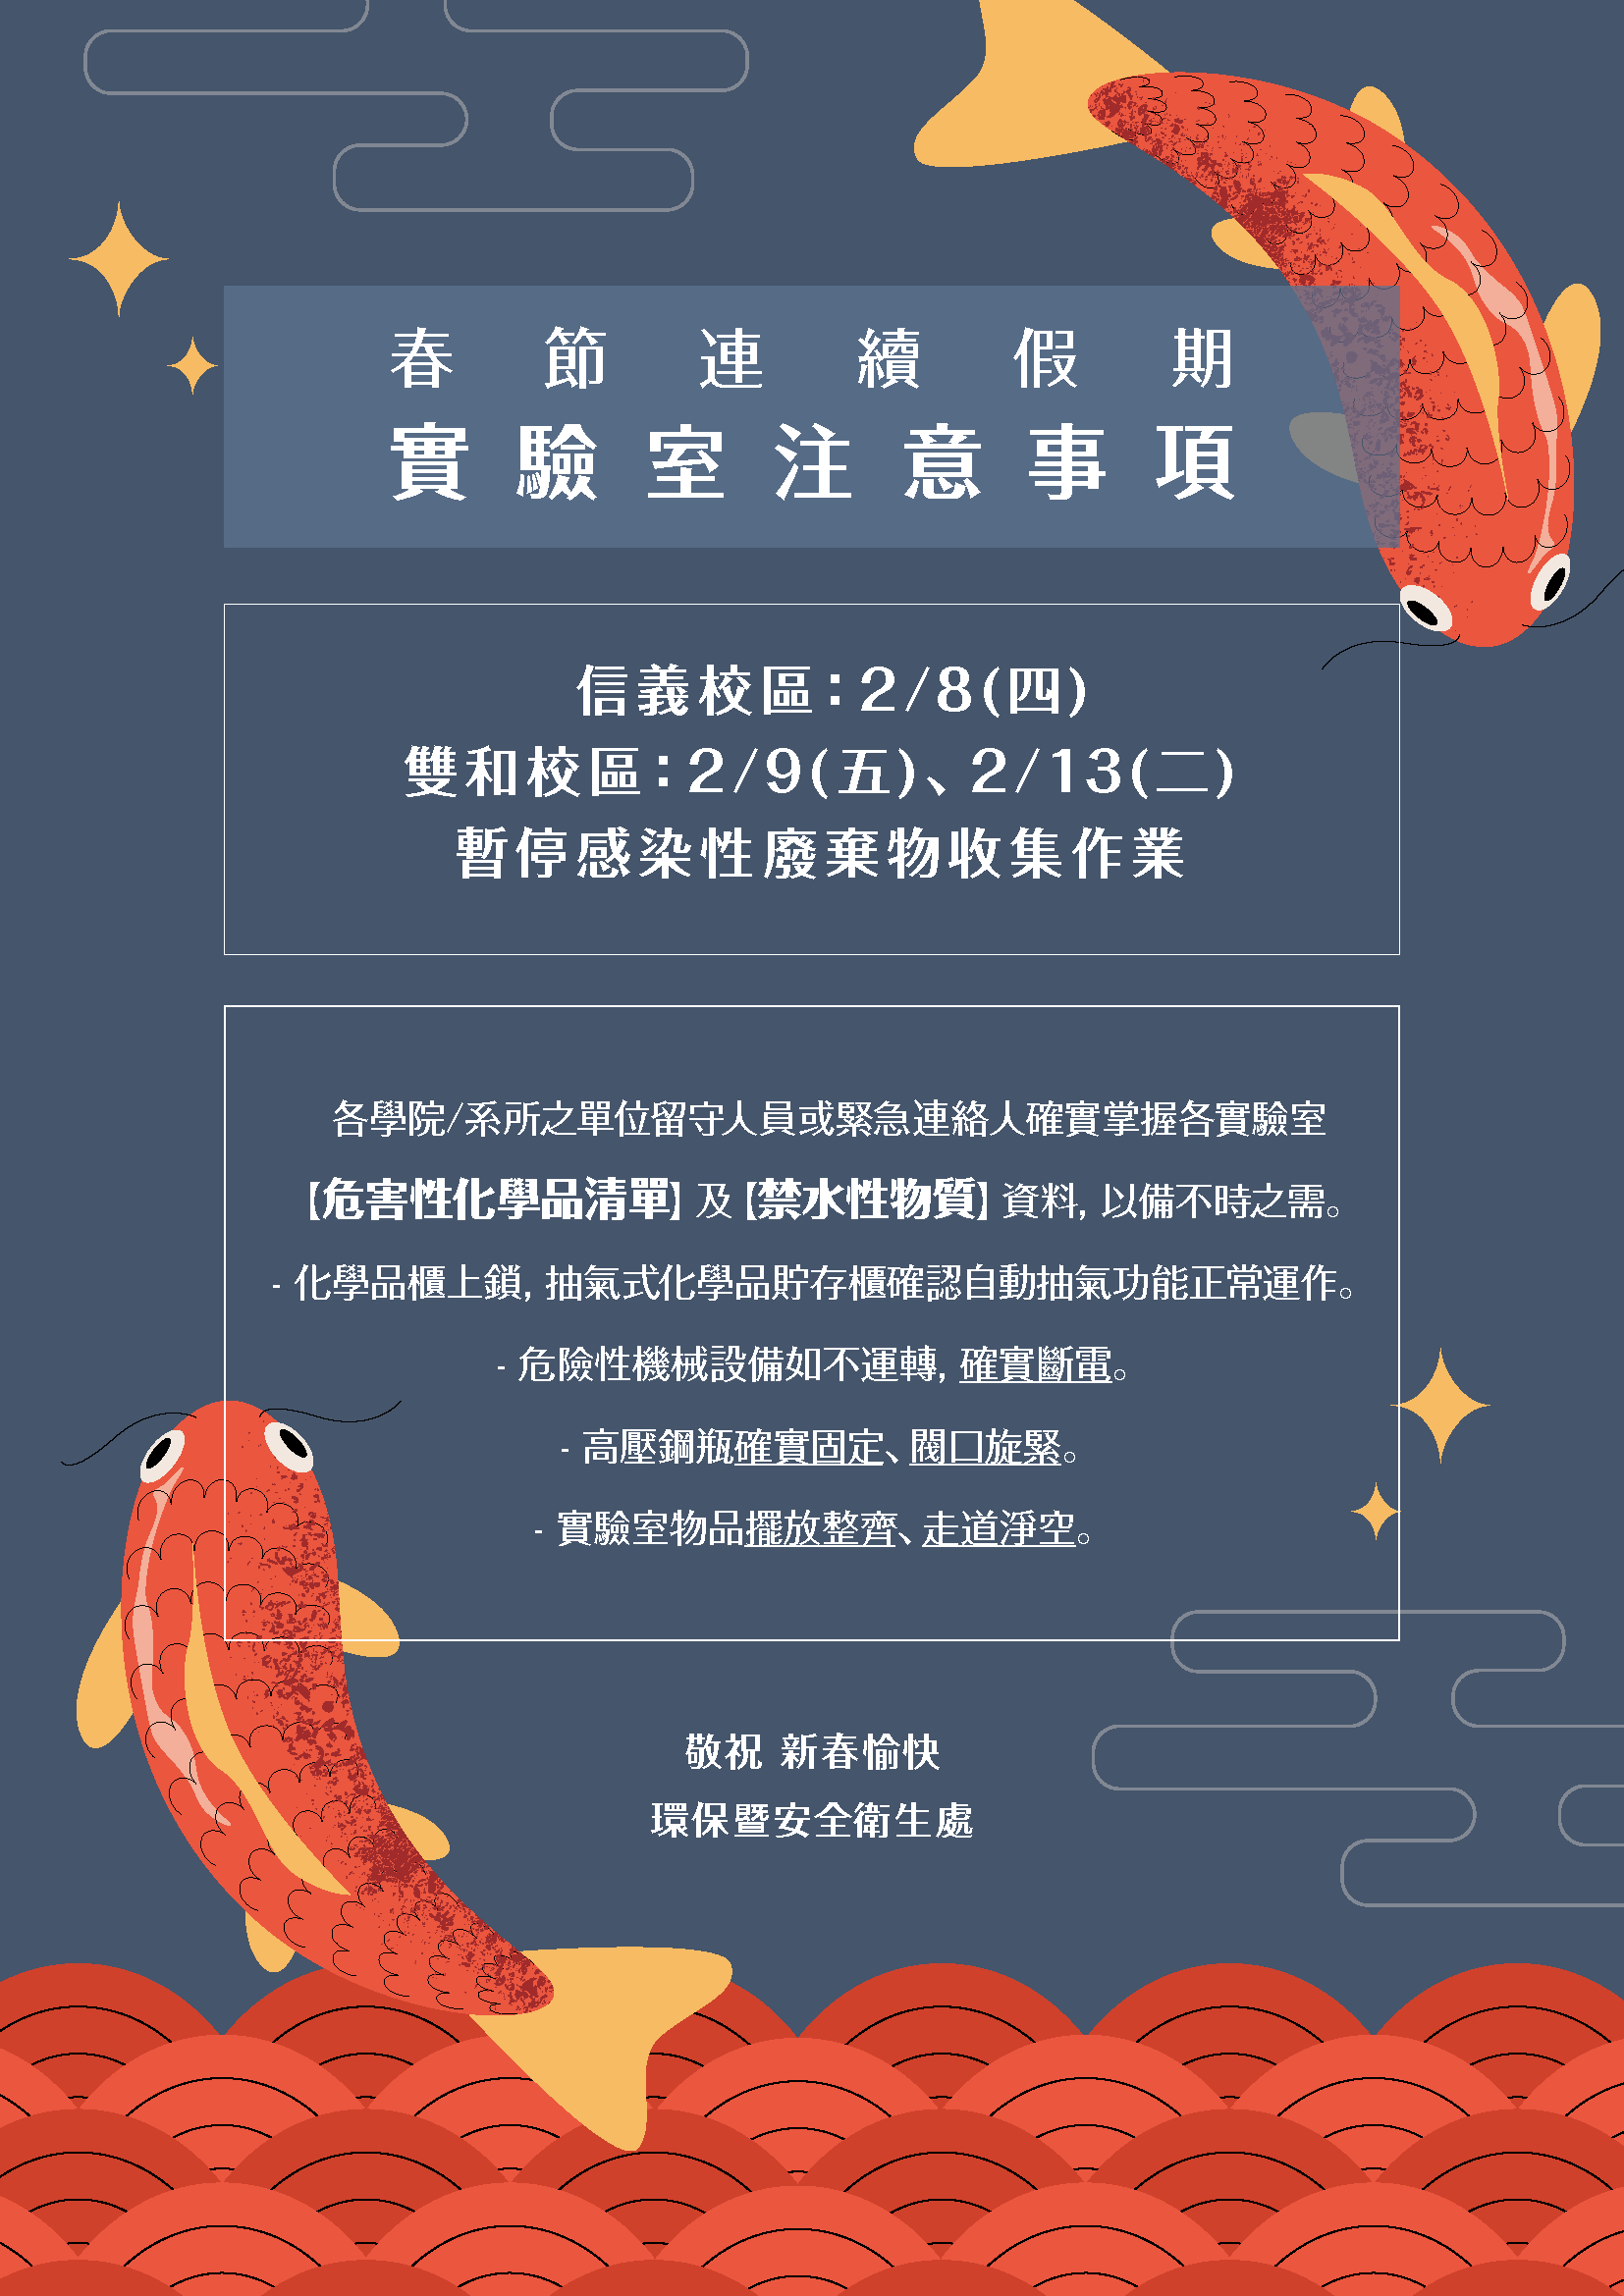 Chinese New Year Holidays Laboratory considerations